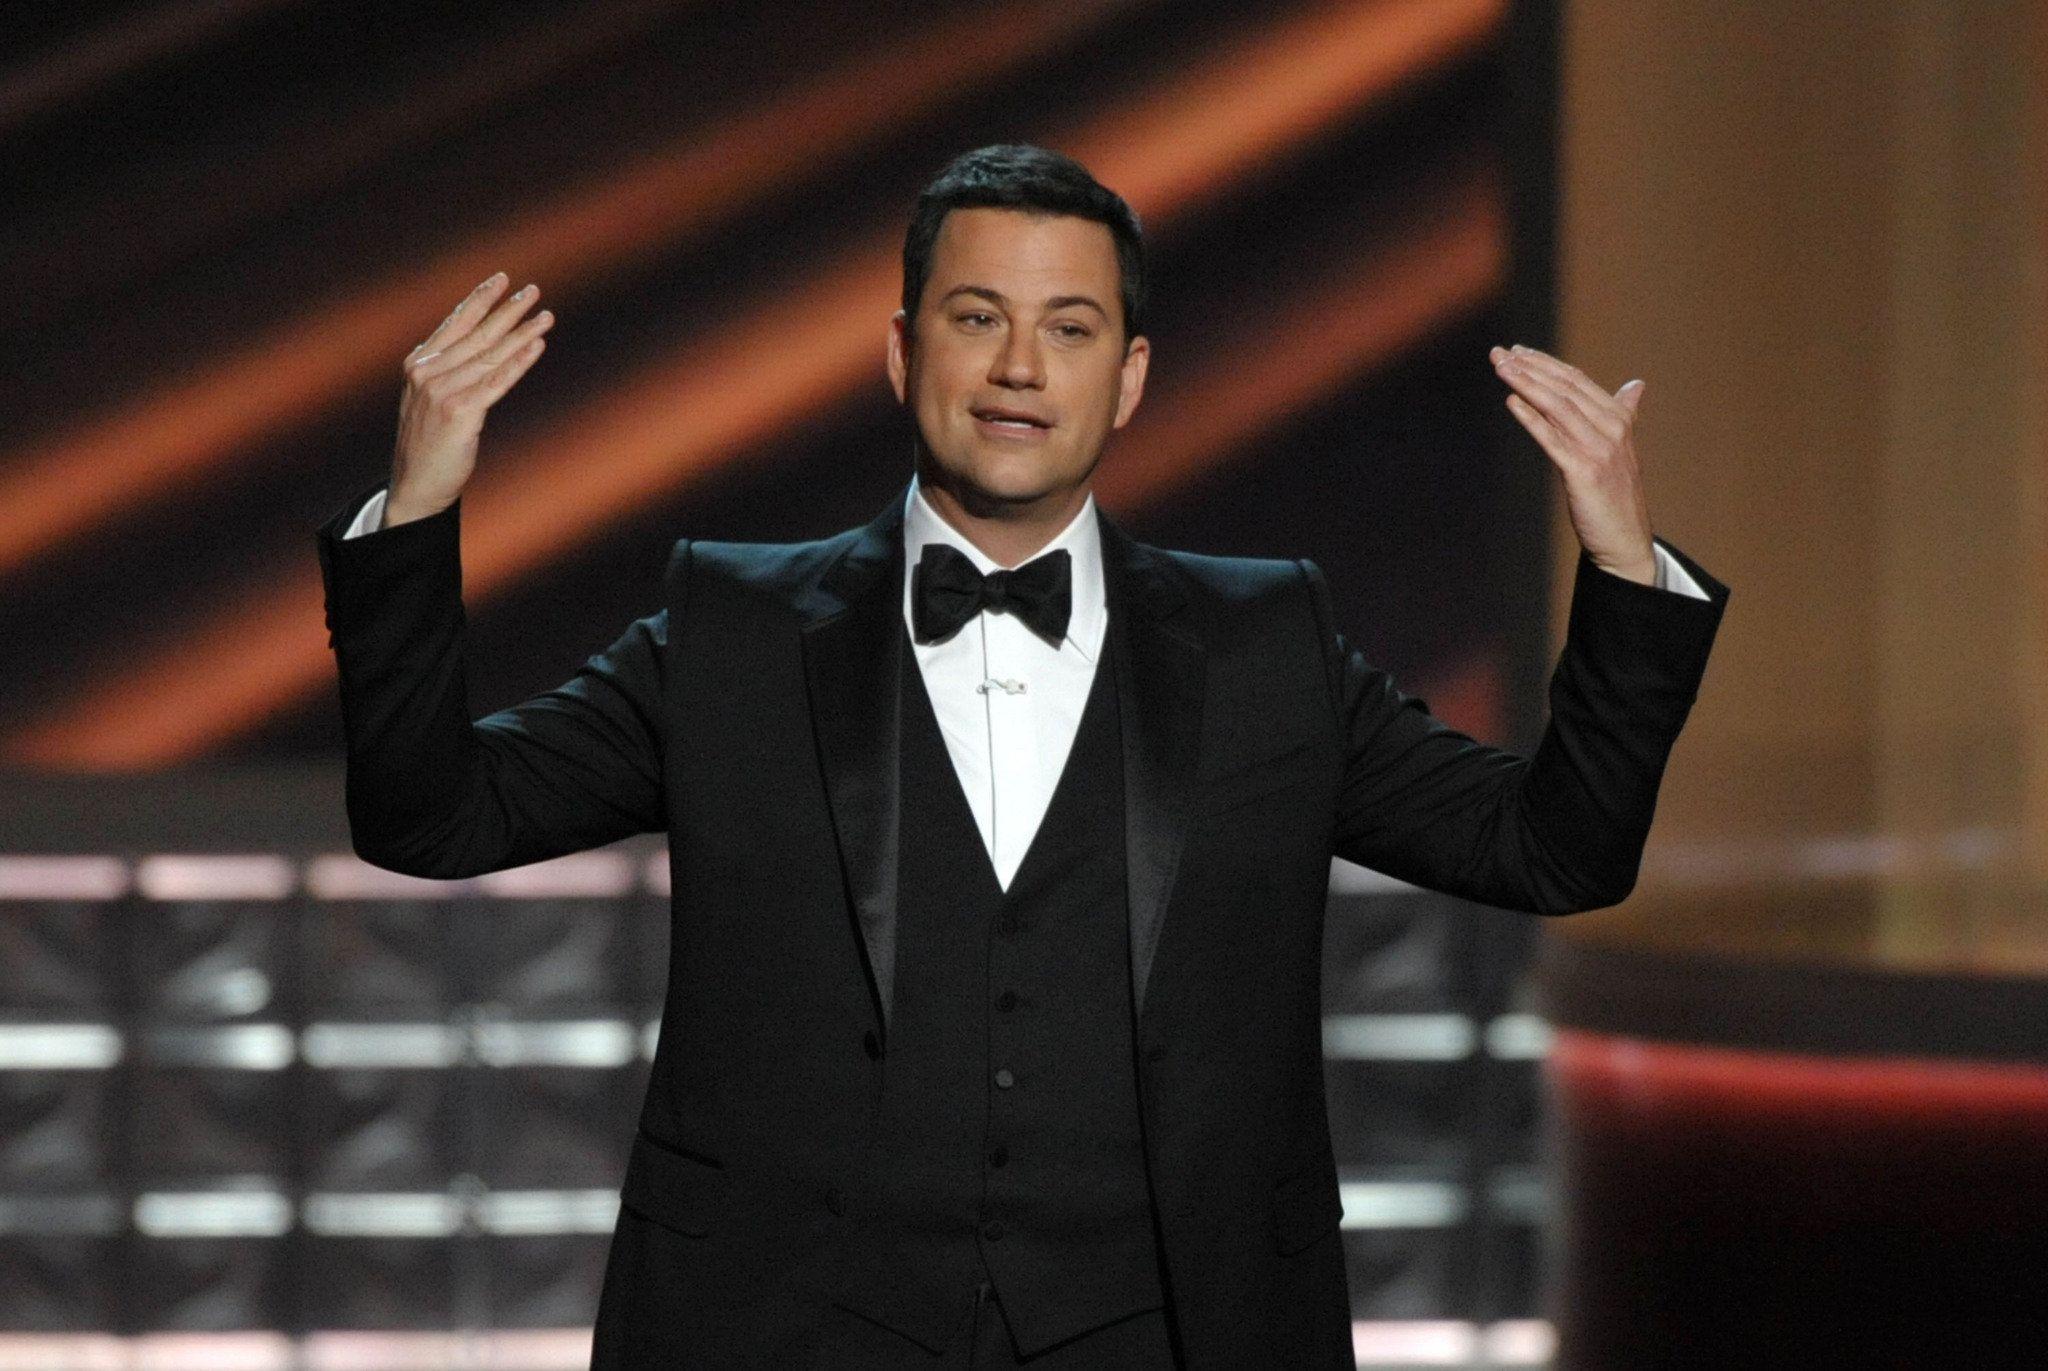 Jimmy Kimmel hosts an efficient Emmycast